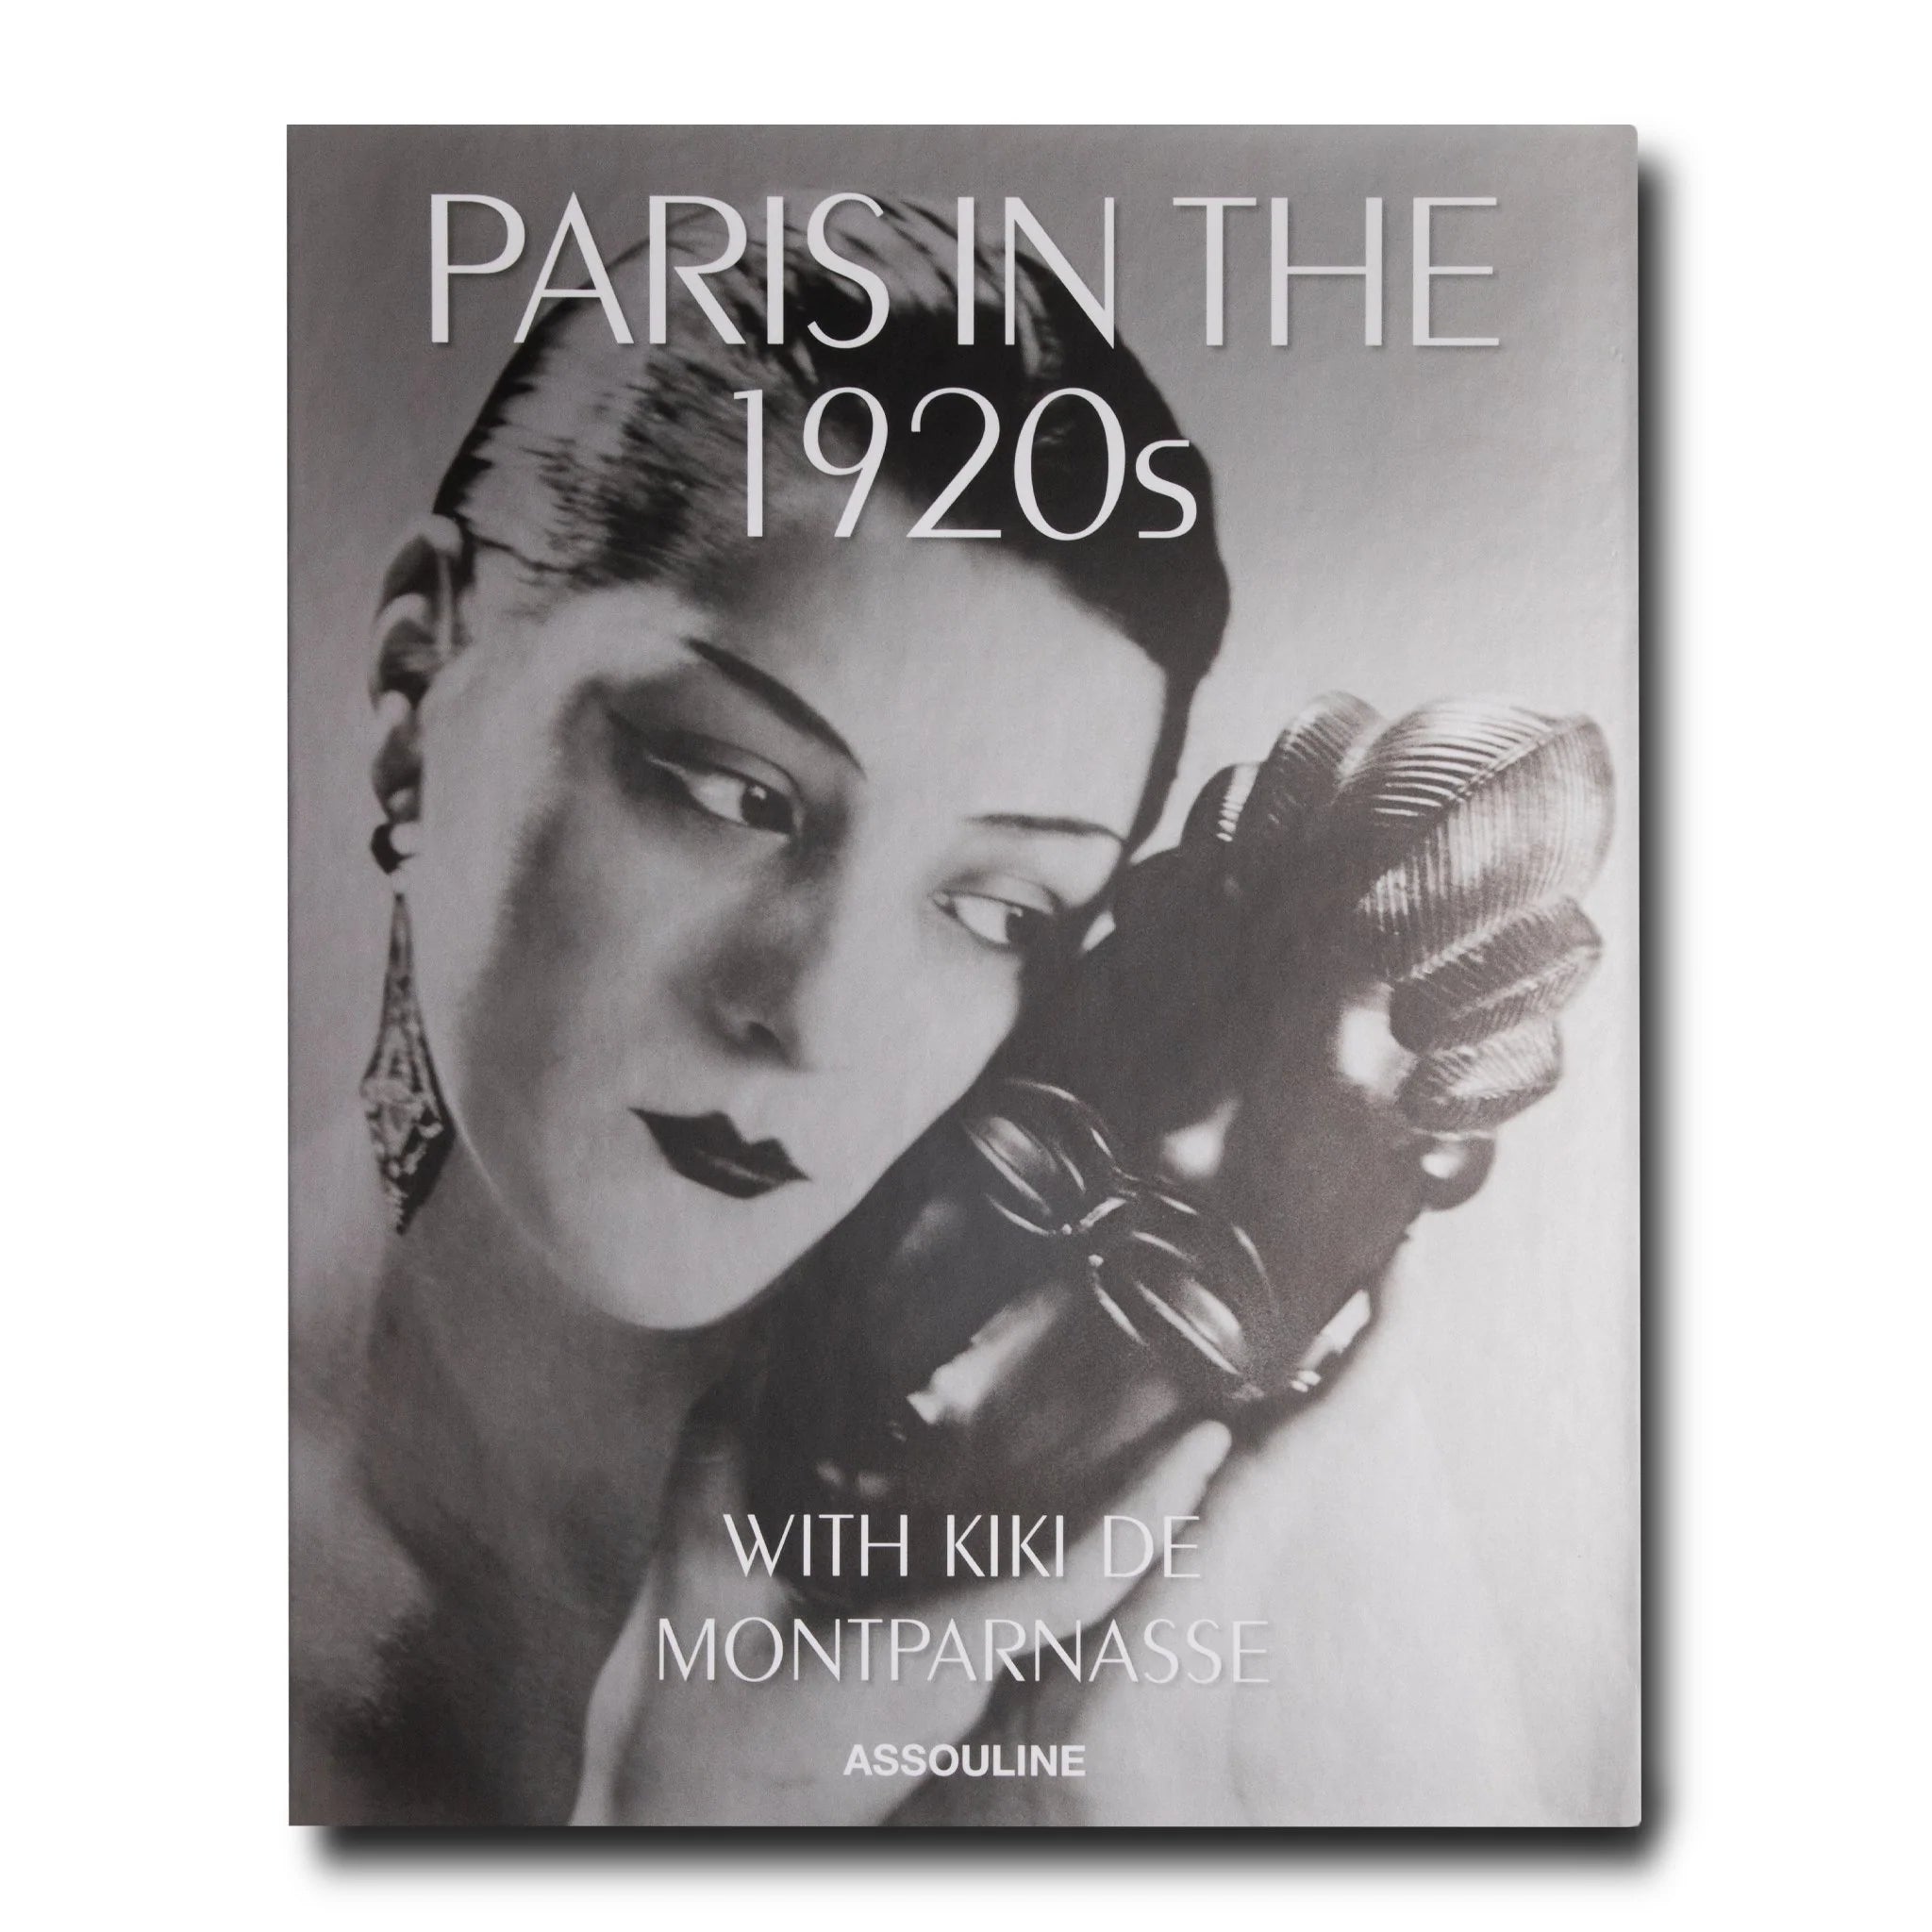 Paris in the 1920s with Kiki de Montparnasse